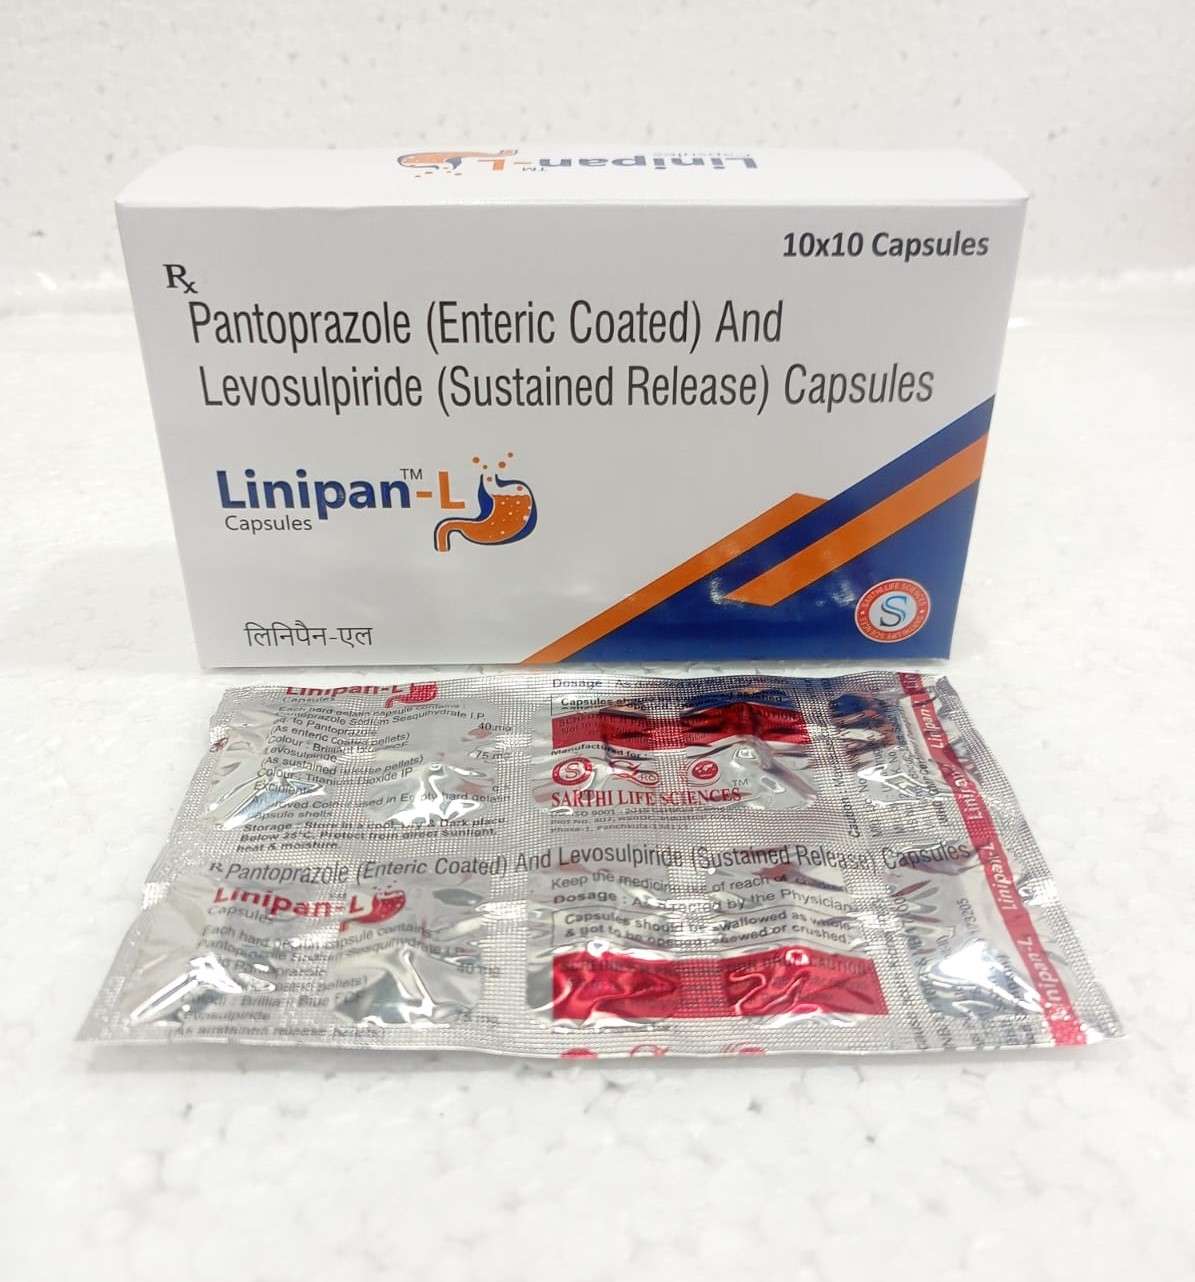 pantoprazole 40mg + levosulpride 75
mg sustained release capsules